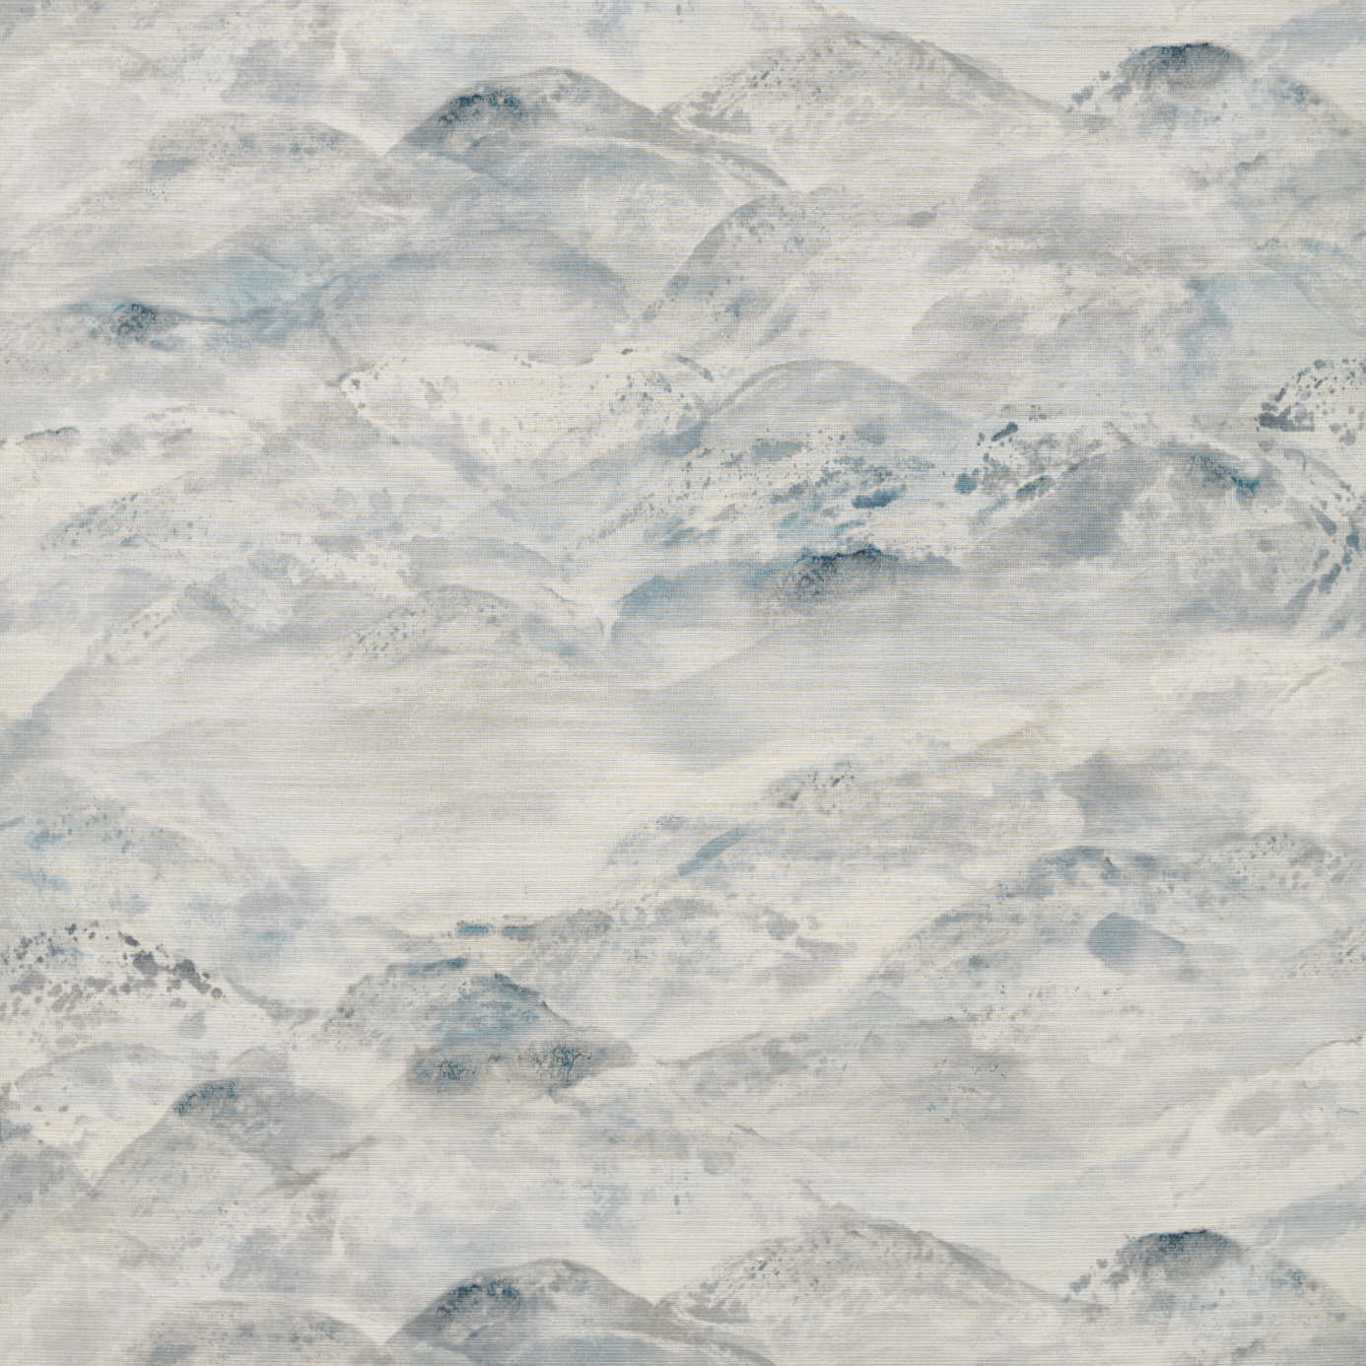 Sansui Indigo Wash Wallpaper by ZOF